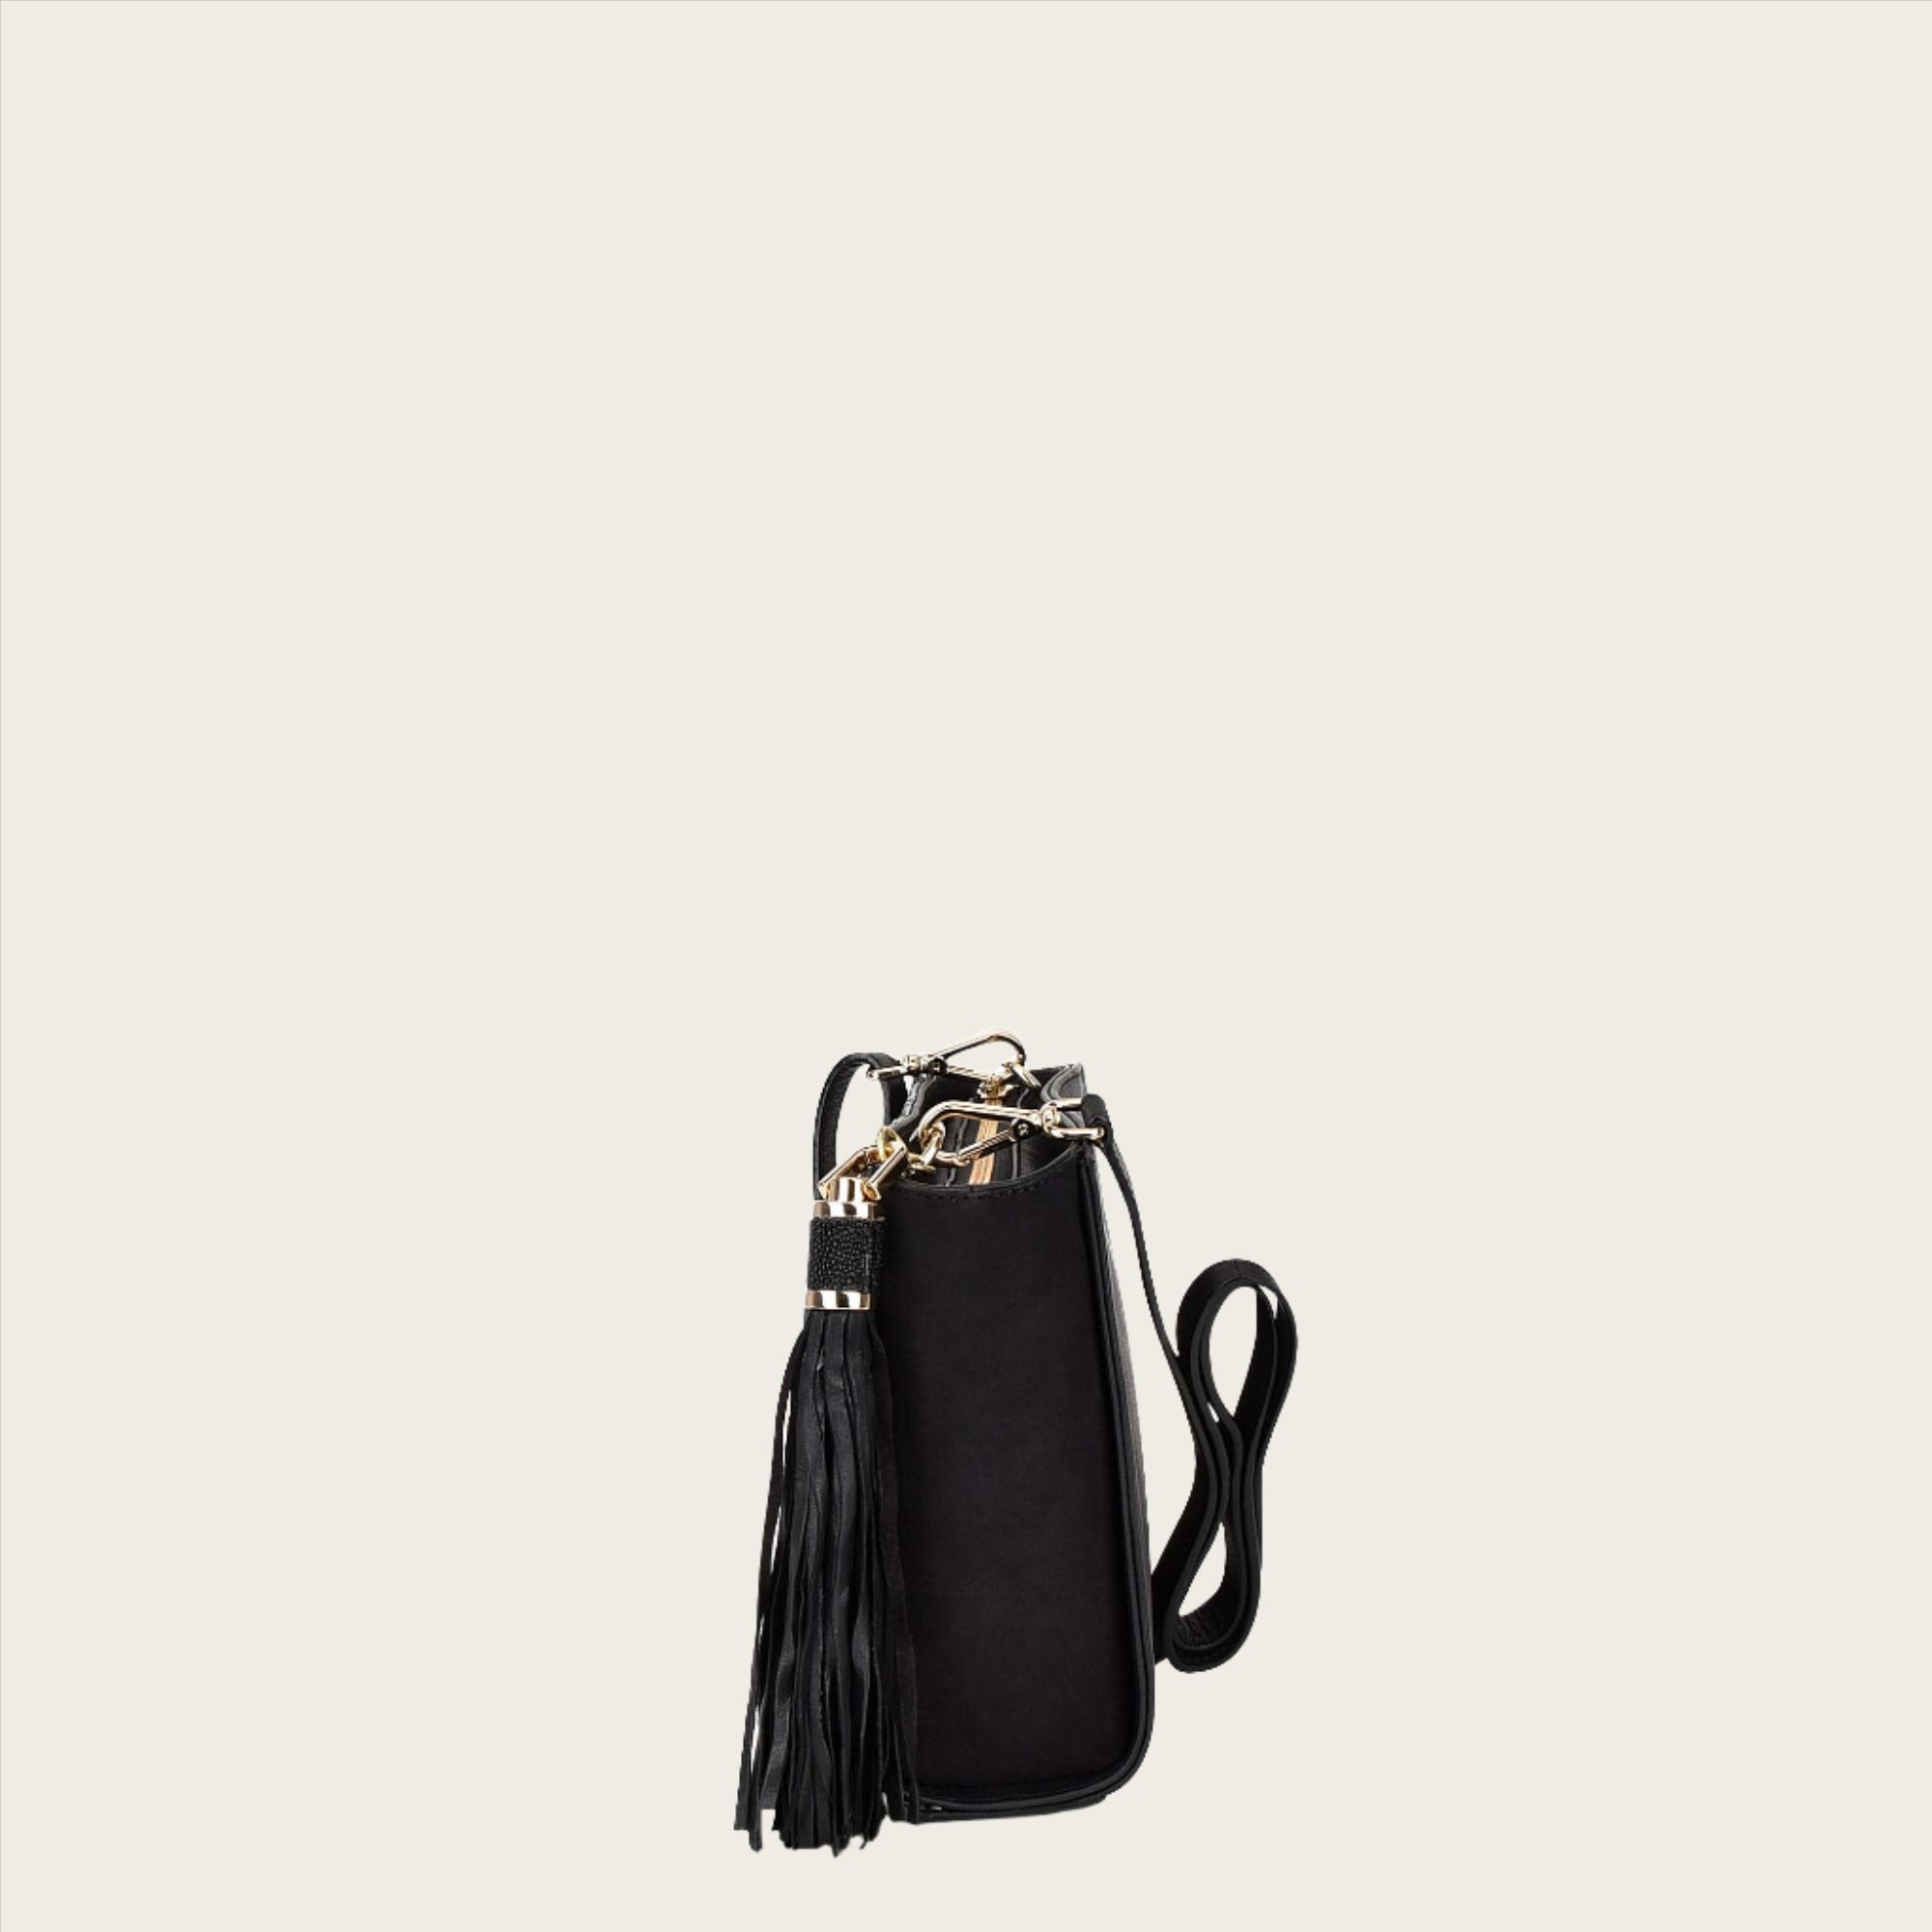 Studded black leather crossbody bag